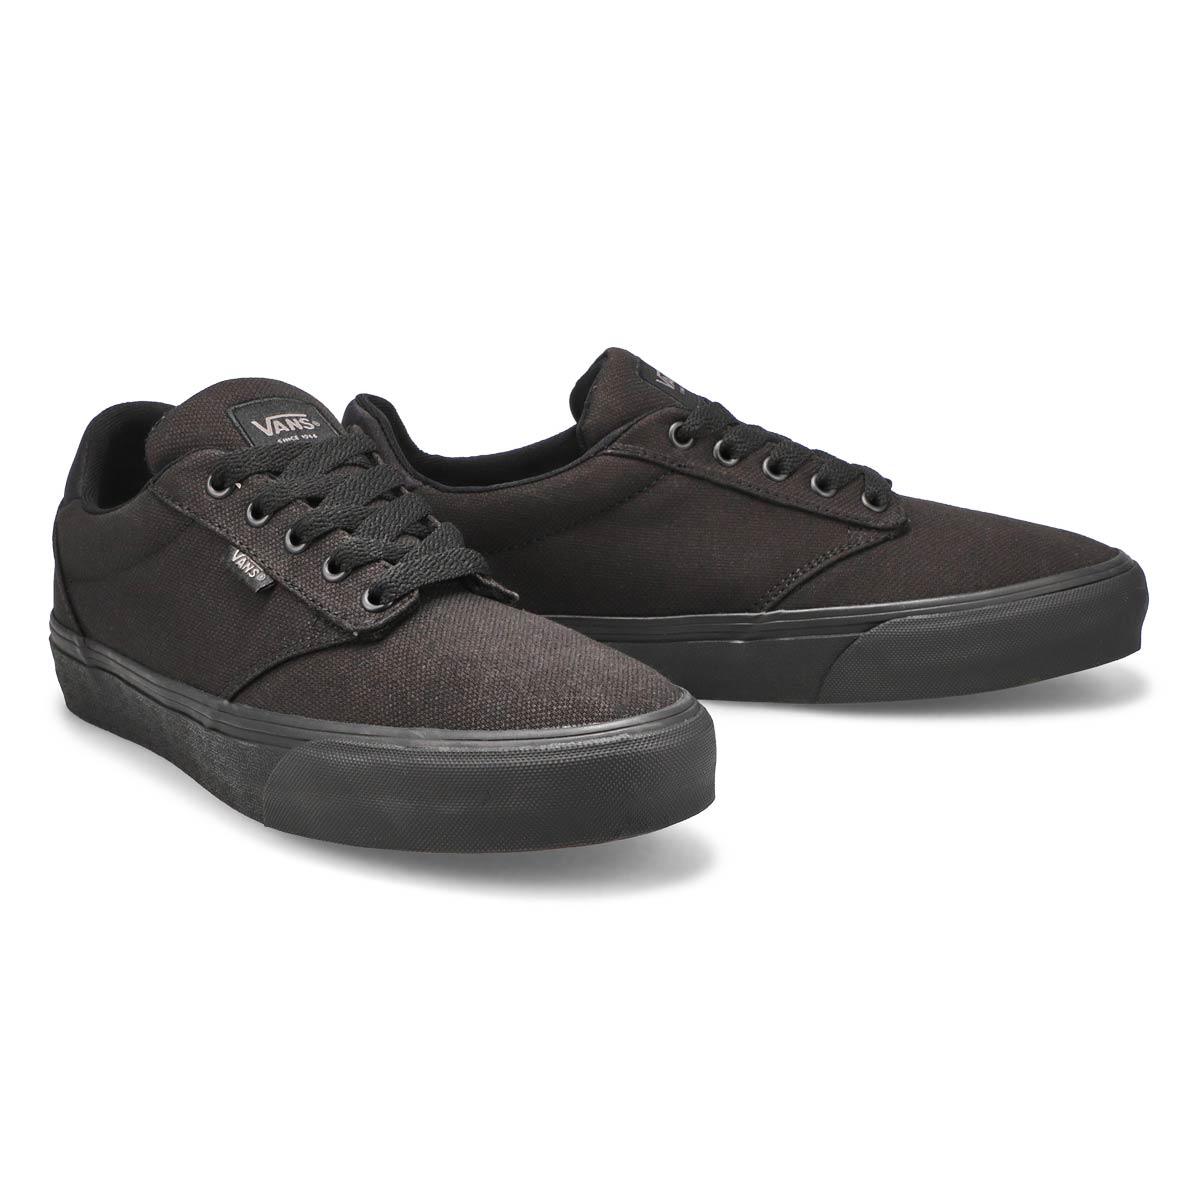 Men's Atwood Deluxe Sneaker - Black/Black